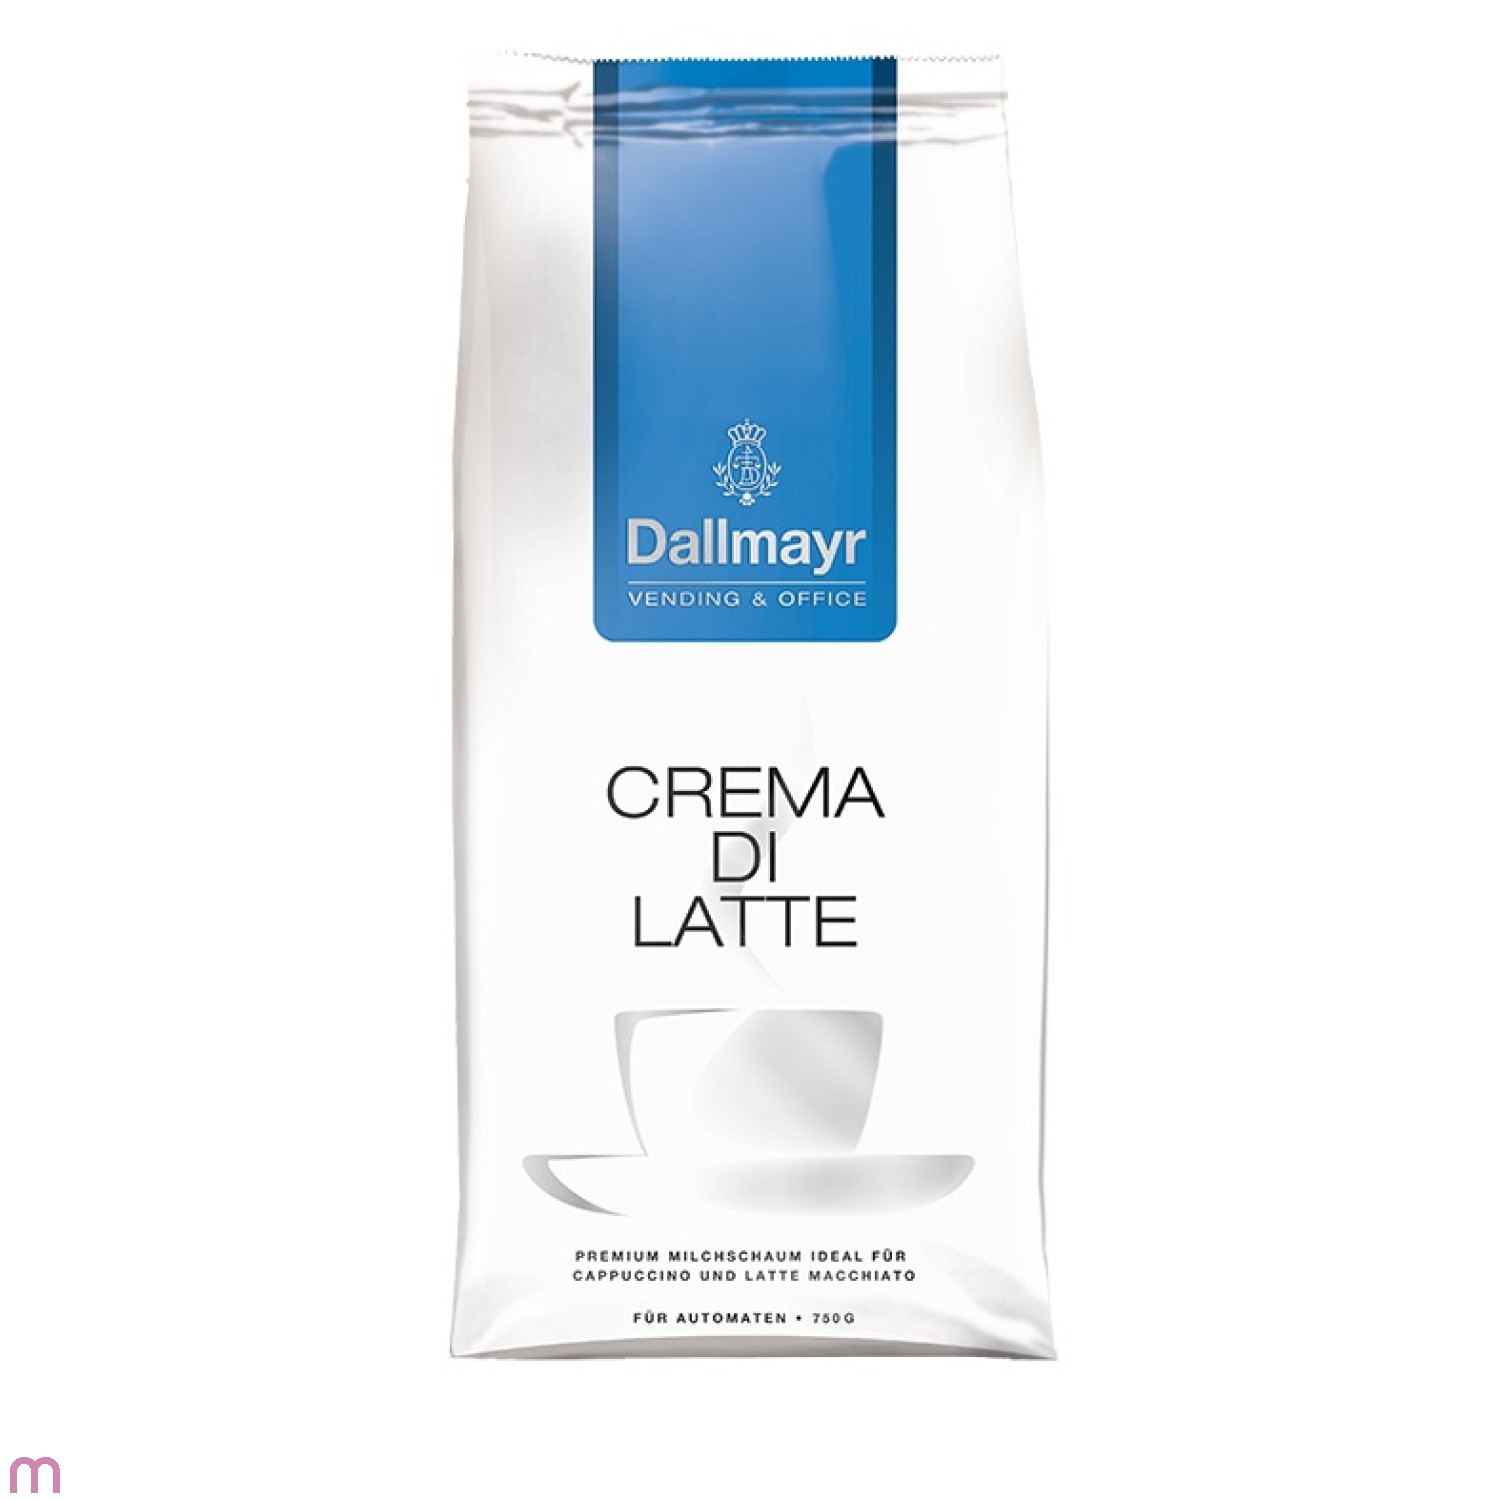 Dallmayr Crema di Latte Vending & Office 750g Instant-Milchpulver